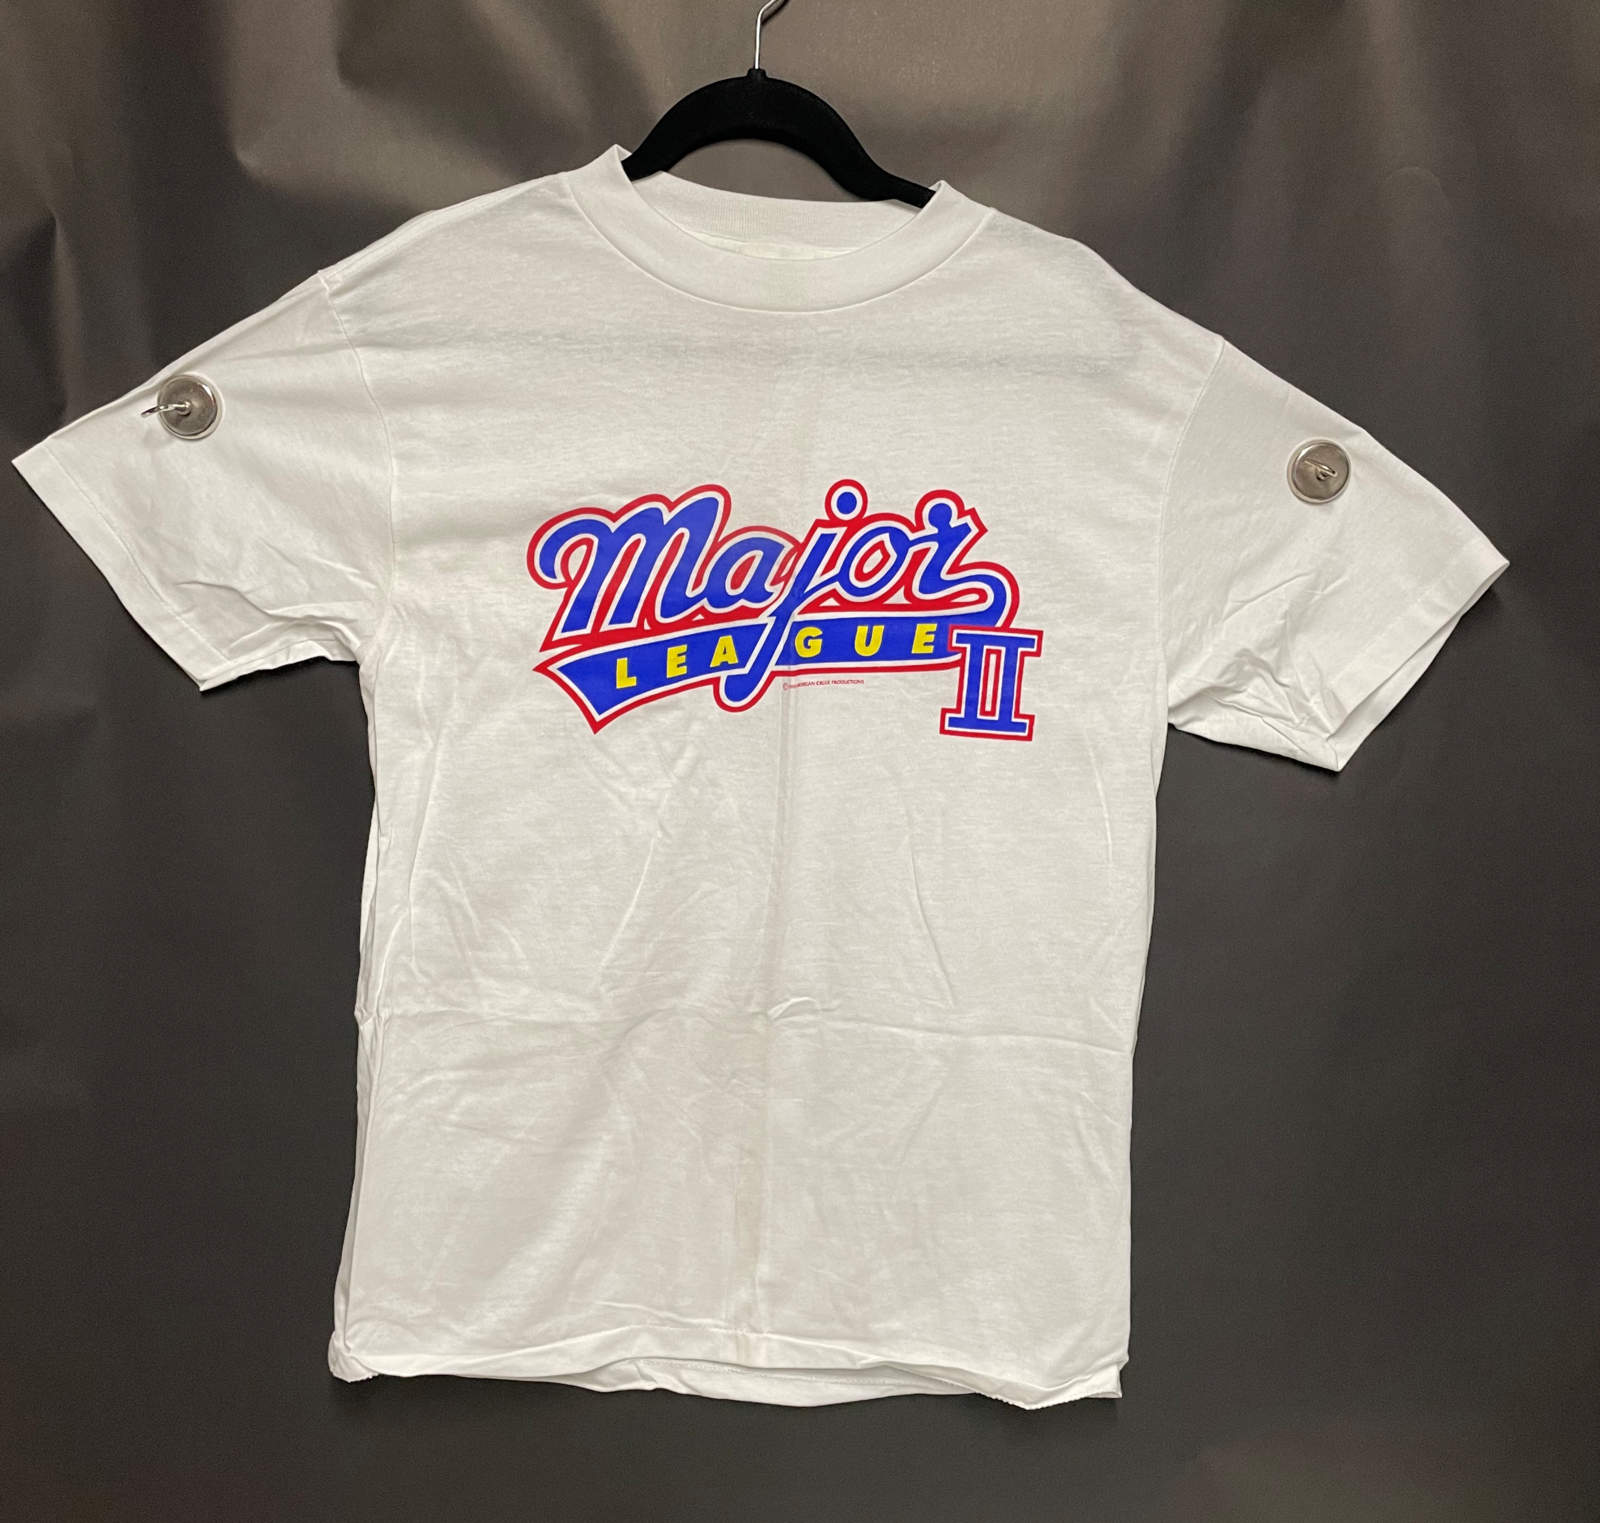 Primary image for Major League II Vintage 1993 Movie Promo T-Shirt Shirt  Sz L